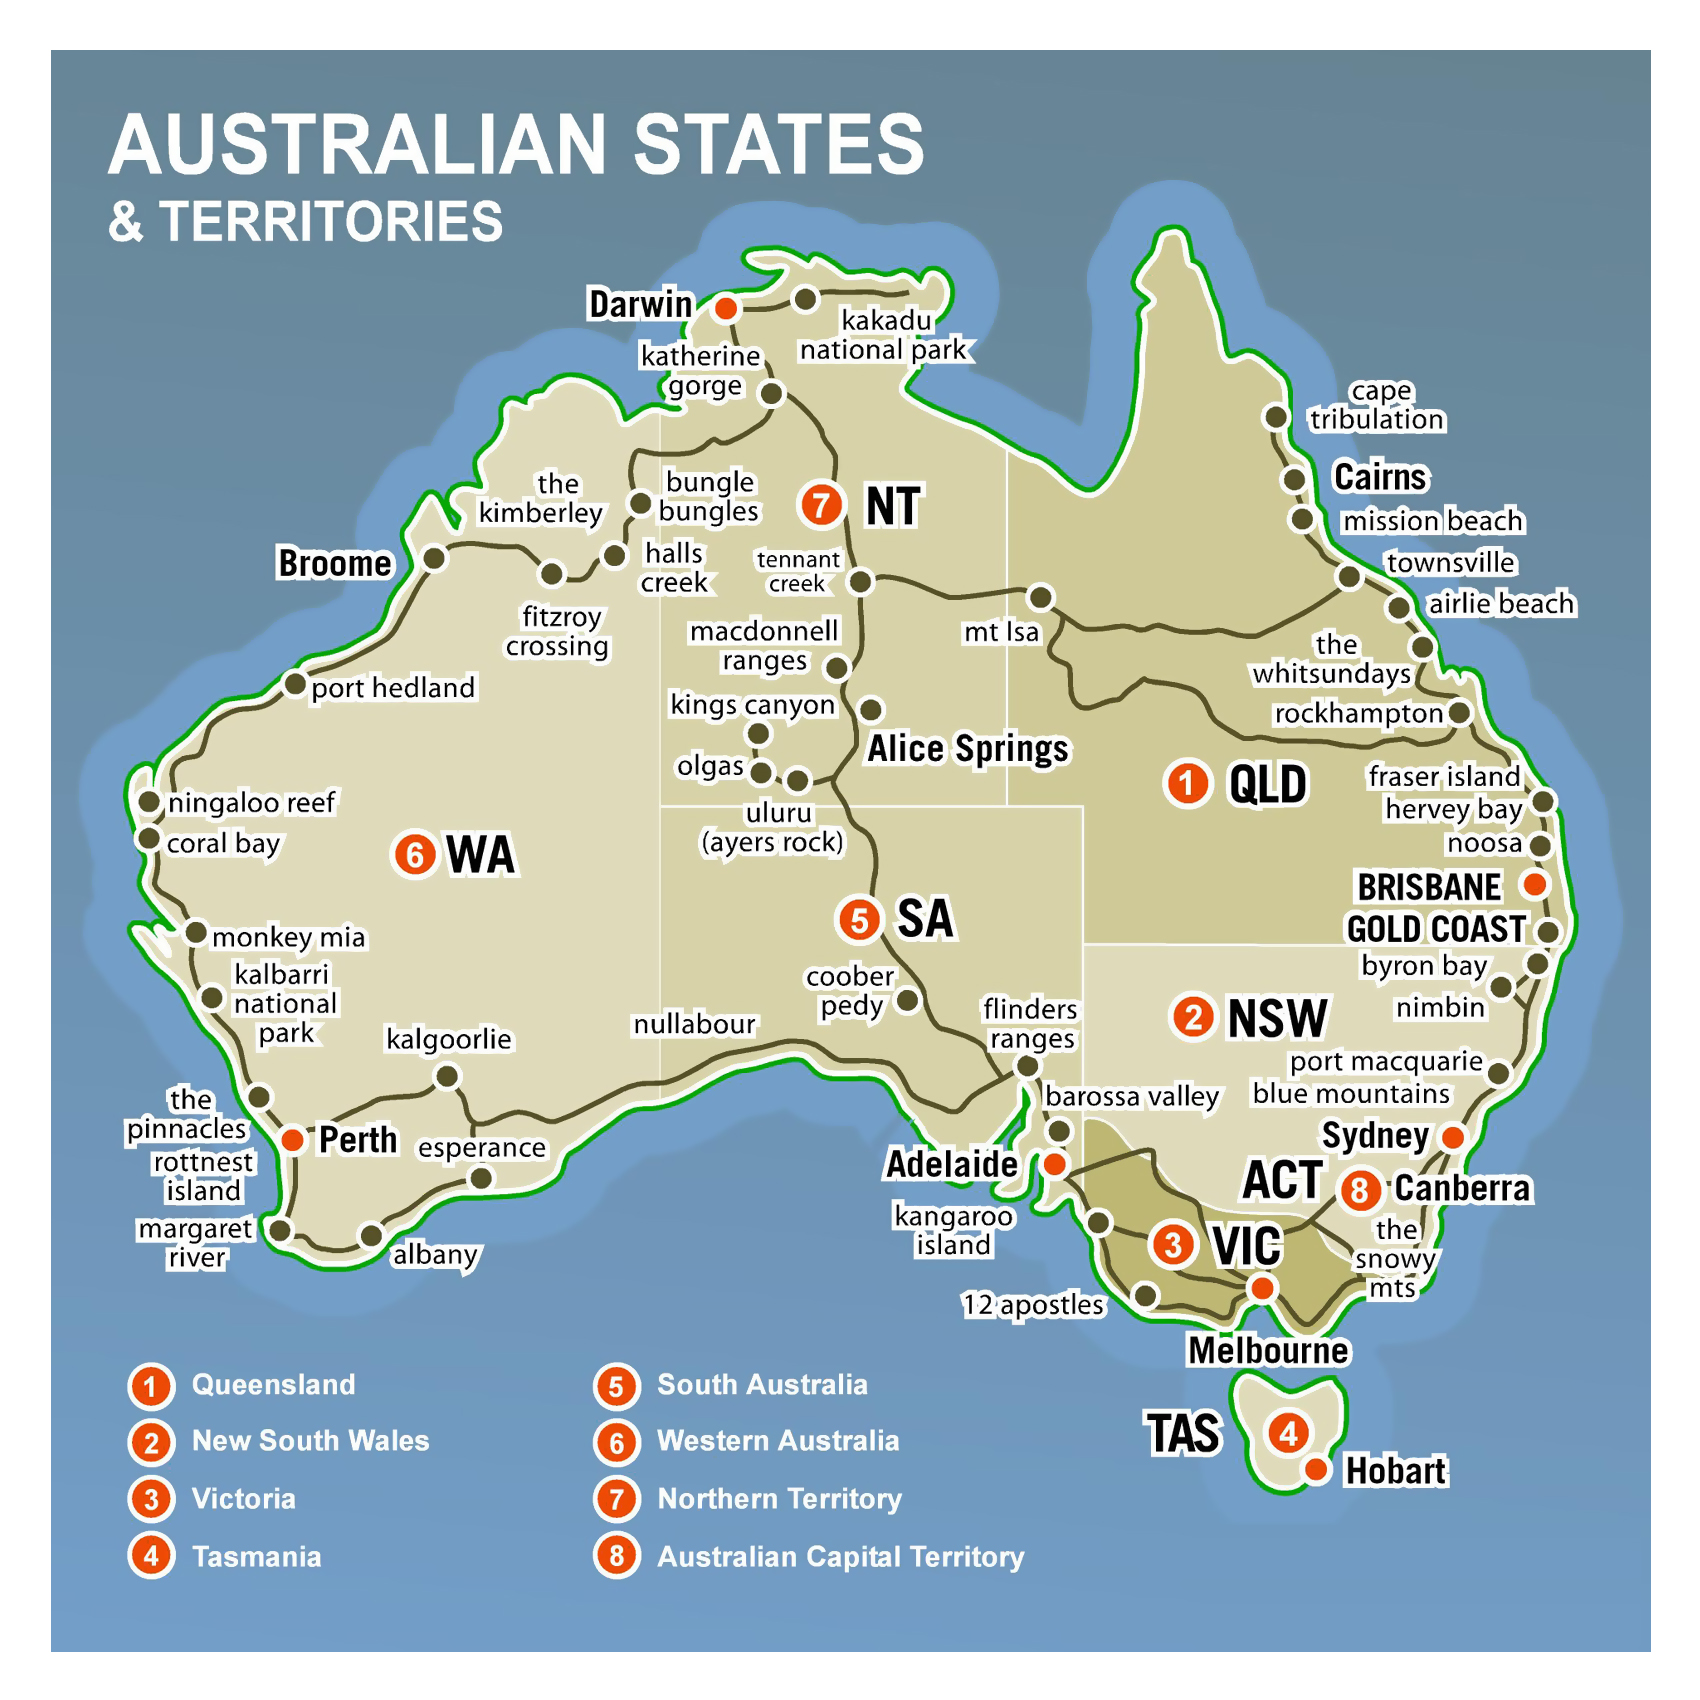 detailed Australia states territories map | Australia Oceania | Mapsland Maps of the World